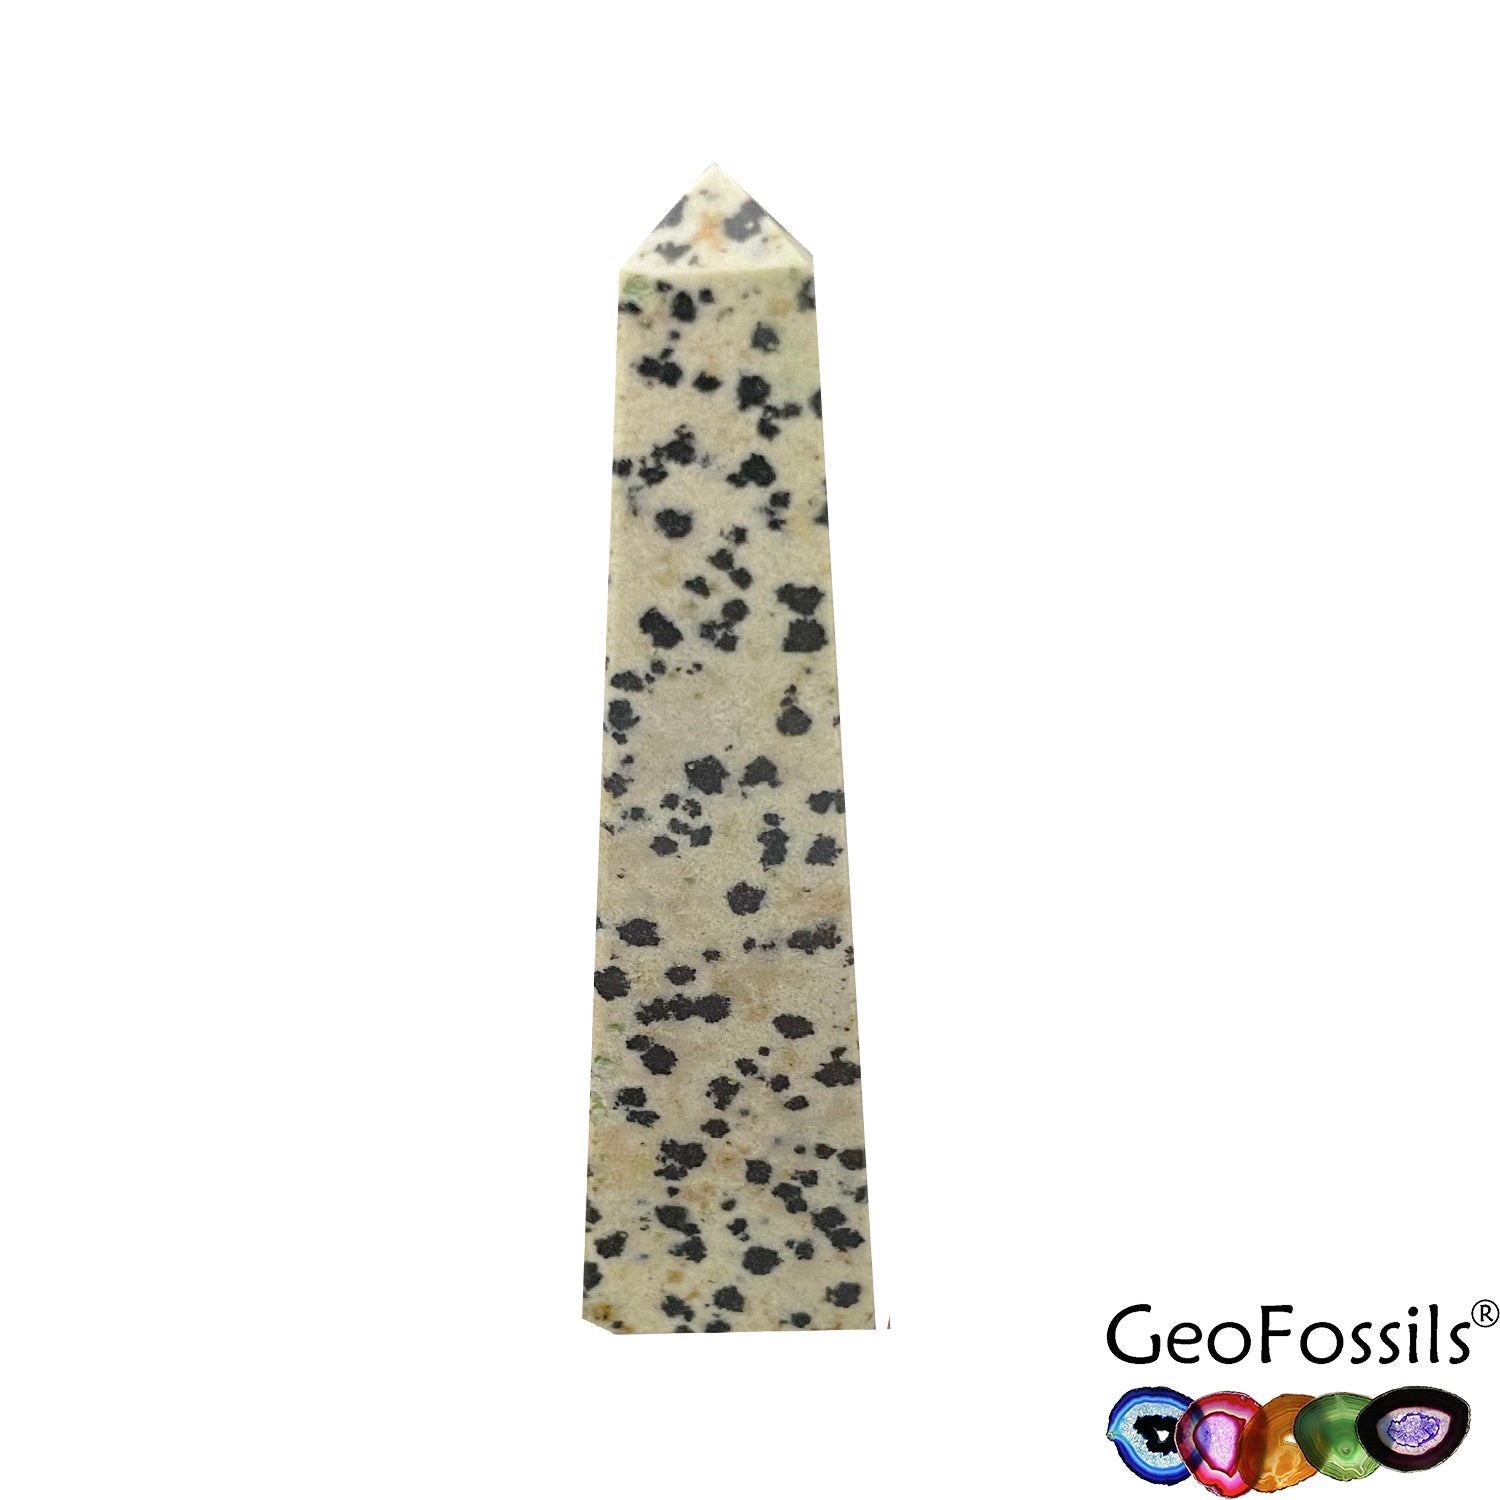 GeoFossils Dalmation Stone £10